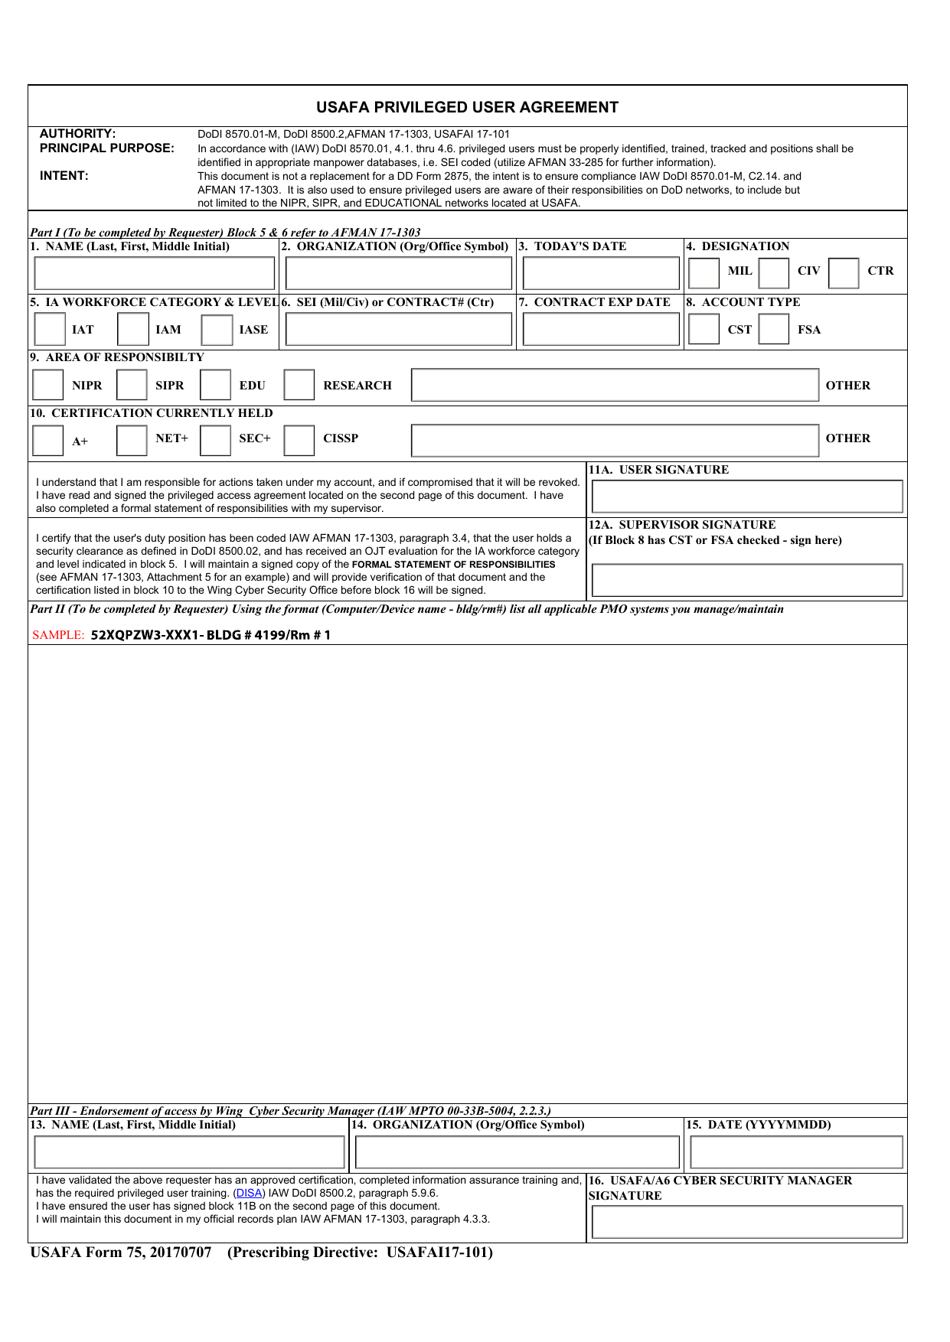 USAFA Form 75 Usafa Privileged User Agreement, Page 1